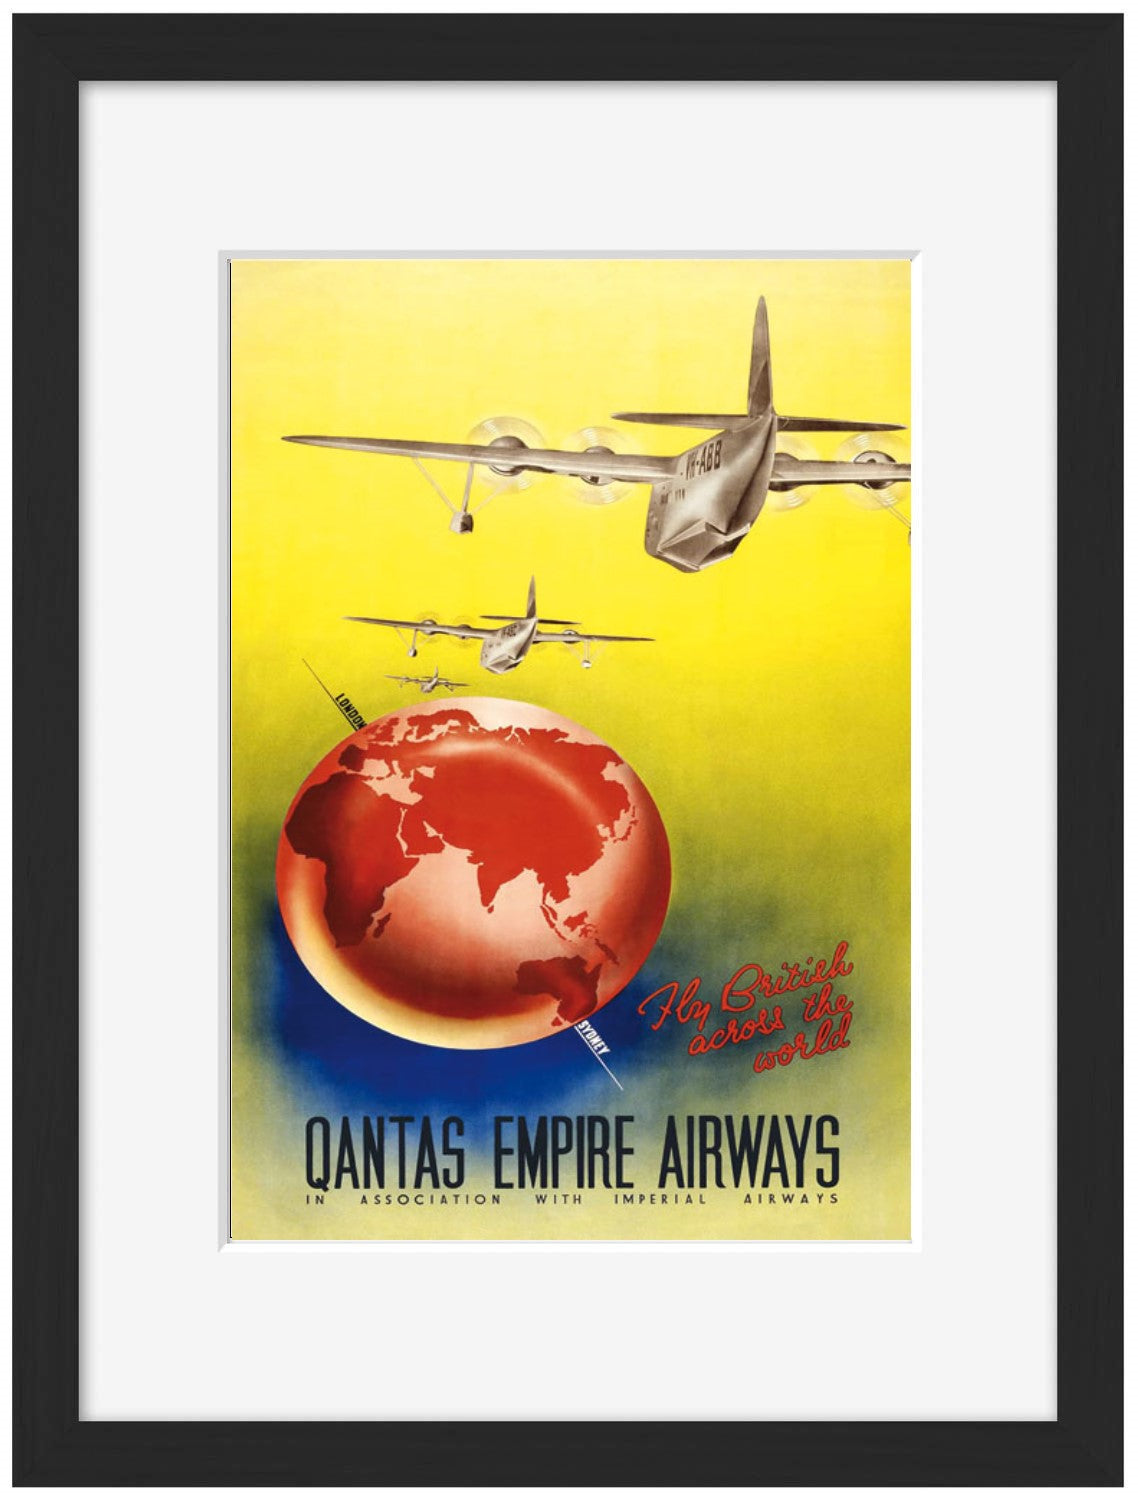 Qantas Empire Airways-airlines, print-Framed Print-30 x 40 cm-BLUE SHAKER